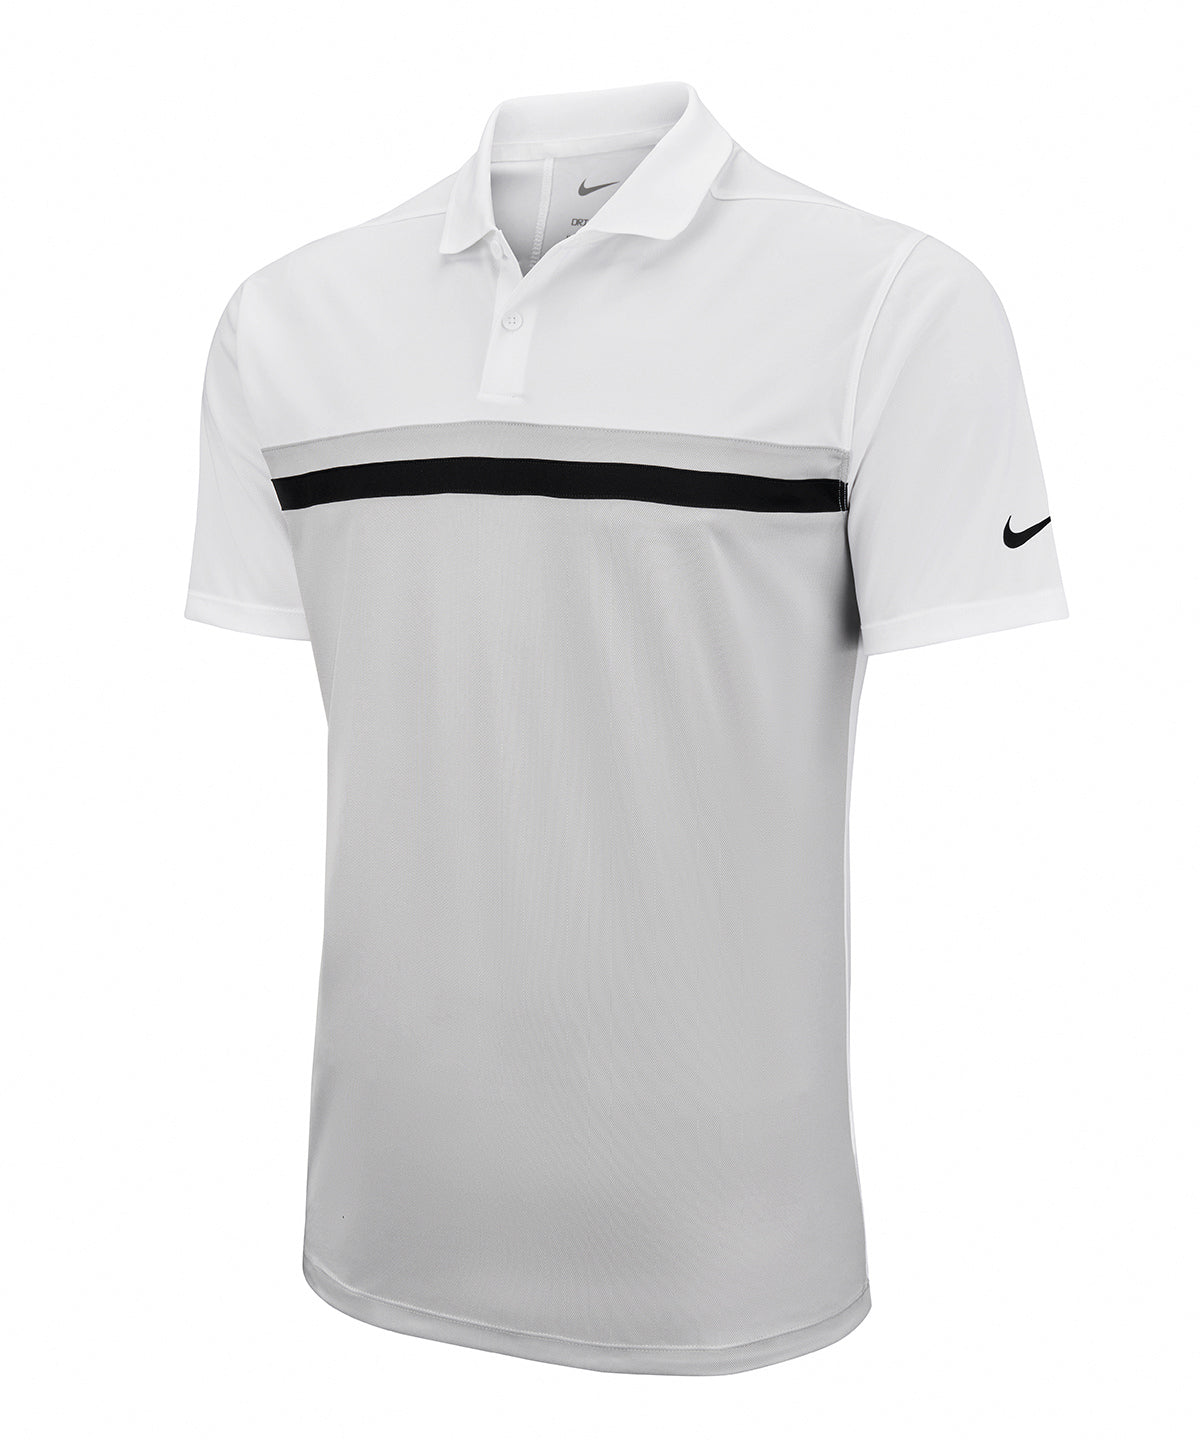 Personalised Polo Shirts - Black Nike Nike Victory colour block polo